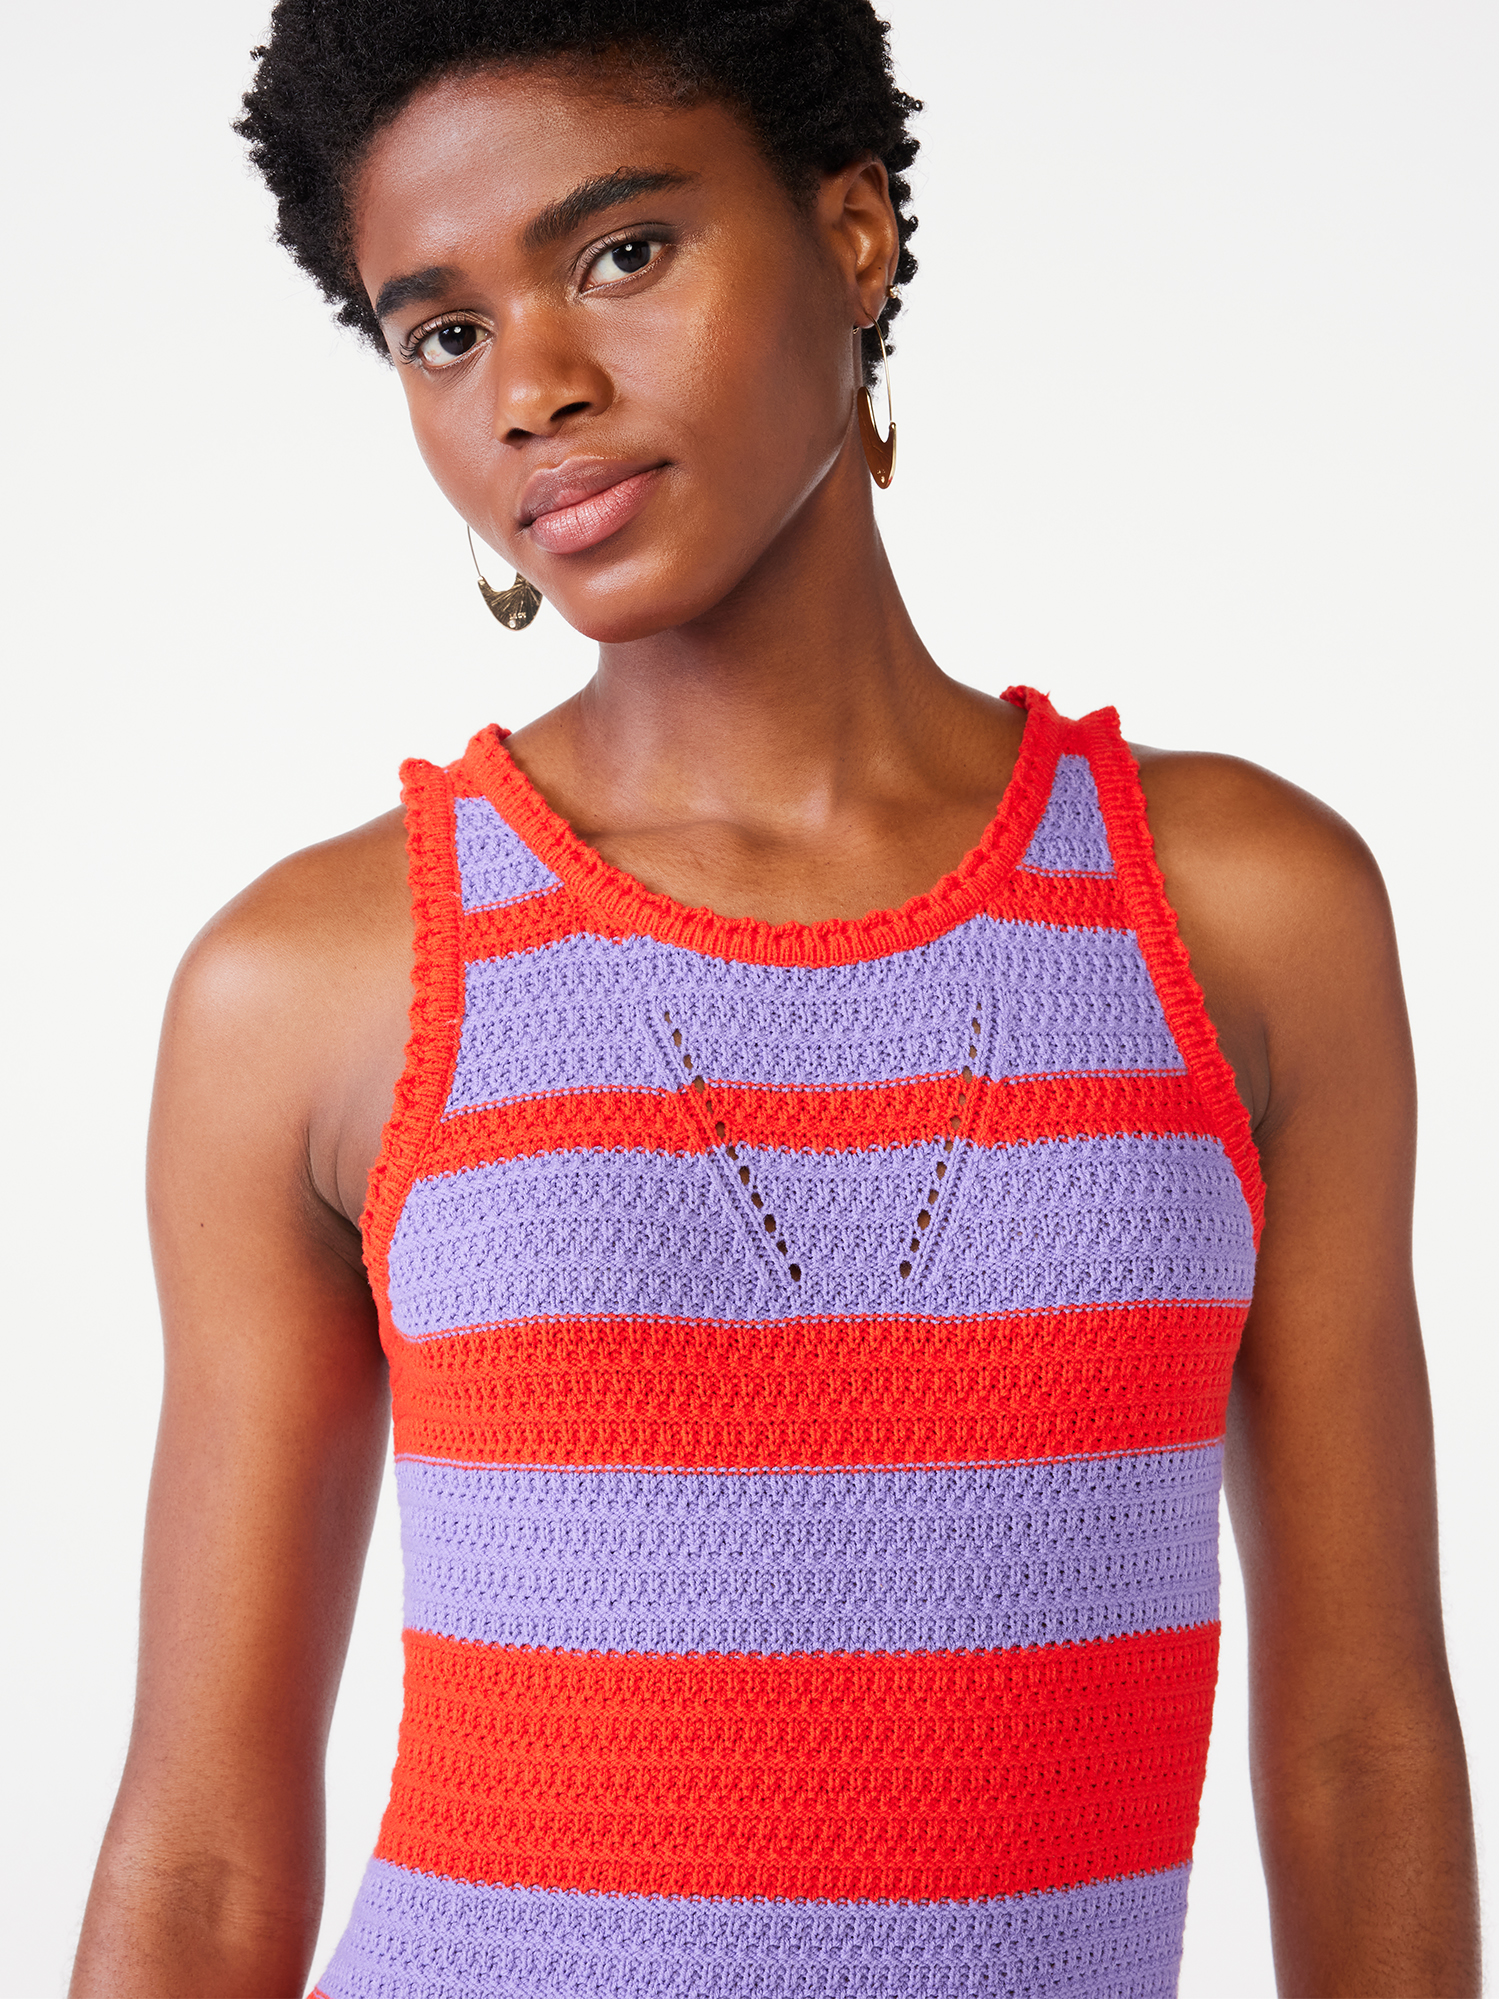 Scoop Women’s Striped Crochet Dress, Mid-Calf Length - image 3 of 4